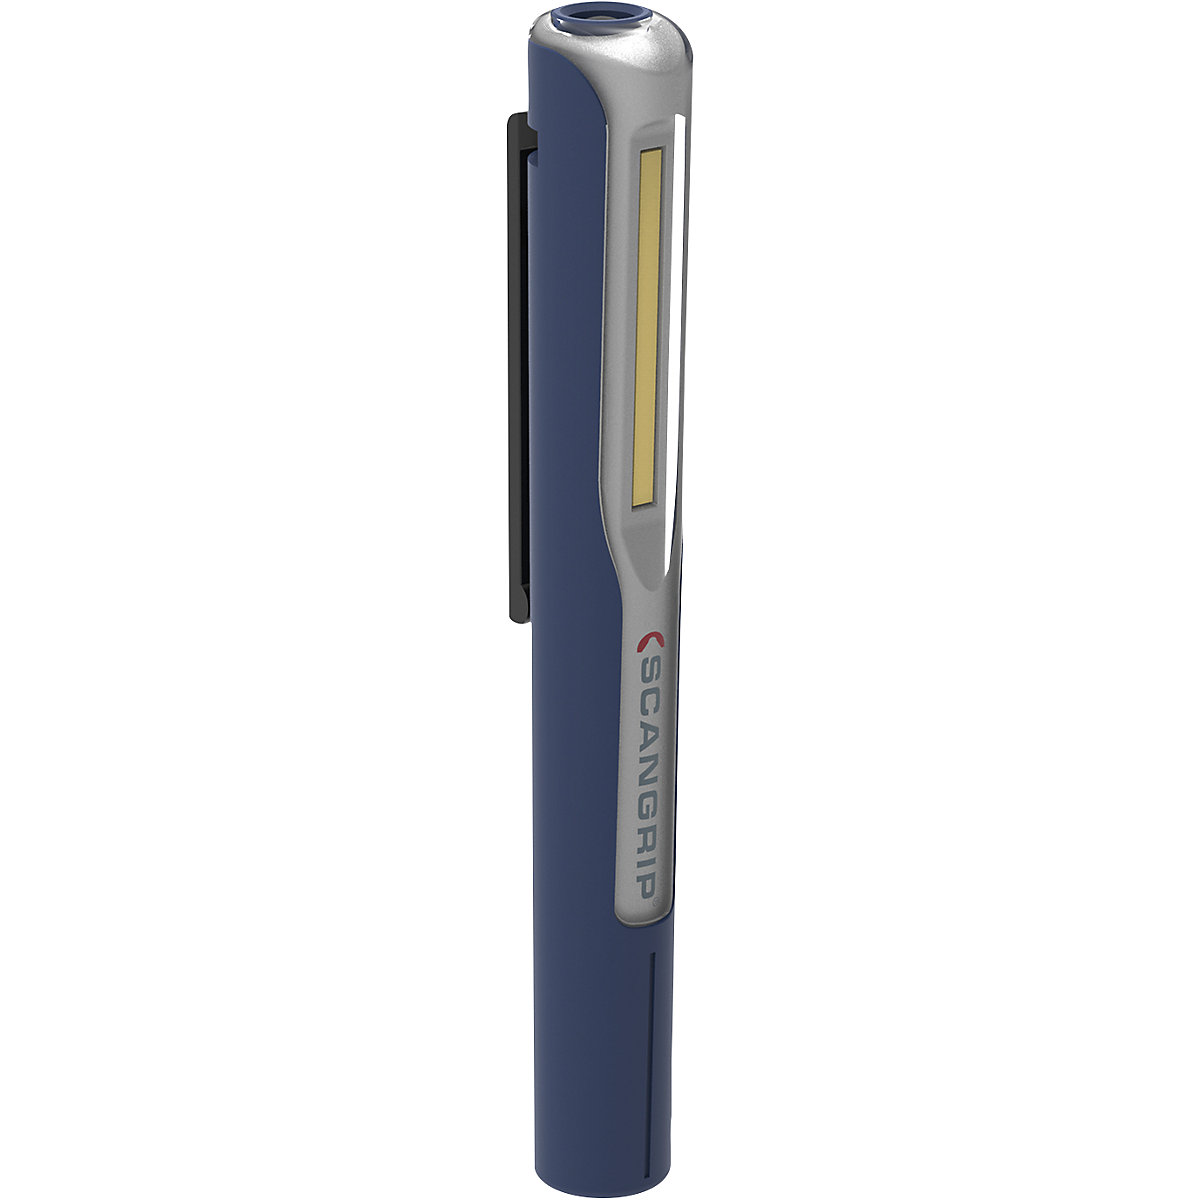 Akumulatorowa latarka długopisowa LED MAG PEN 3 – SCANGRIP (Zdjęcie produktu 9)-8